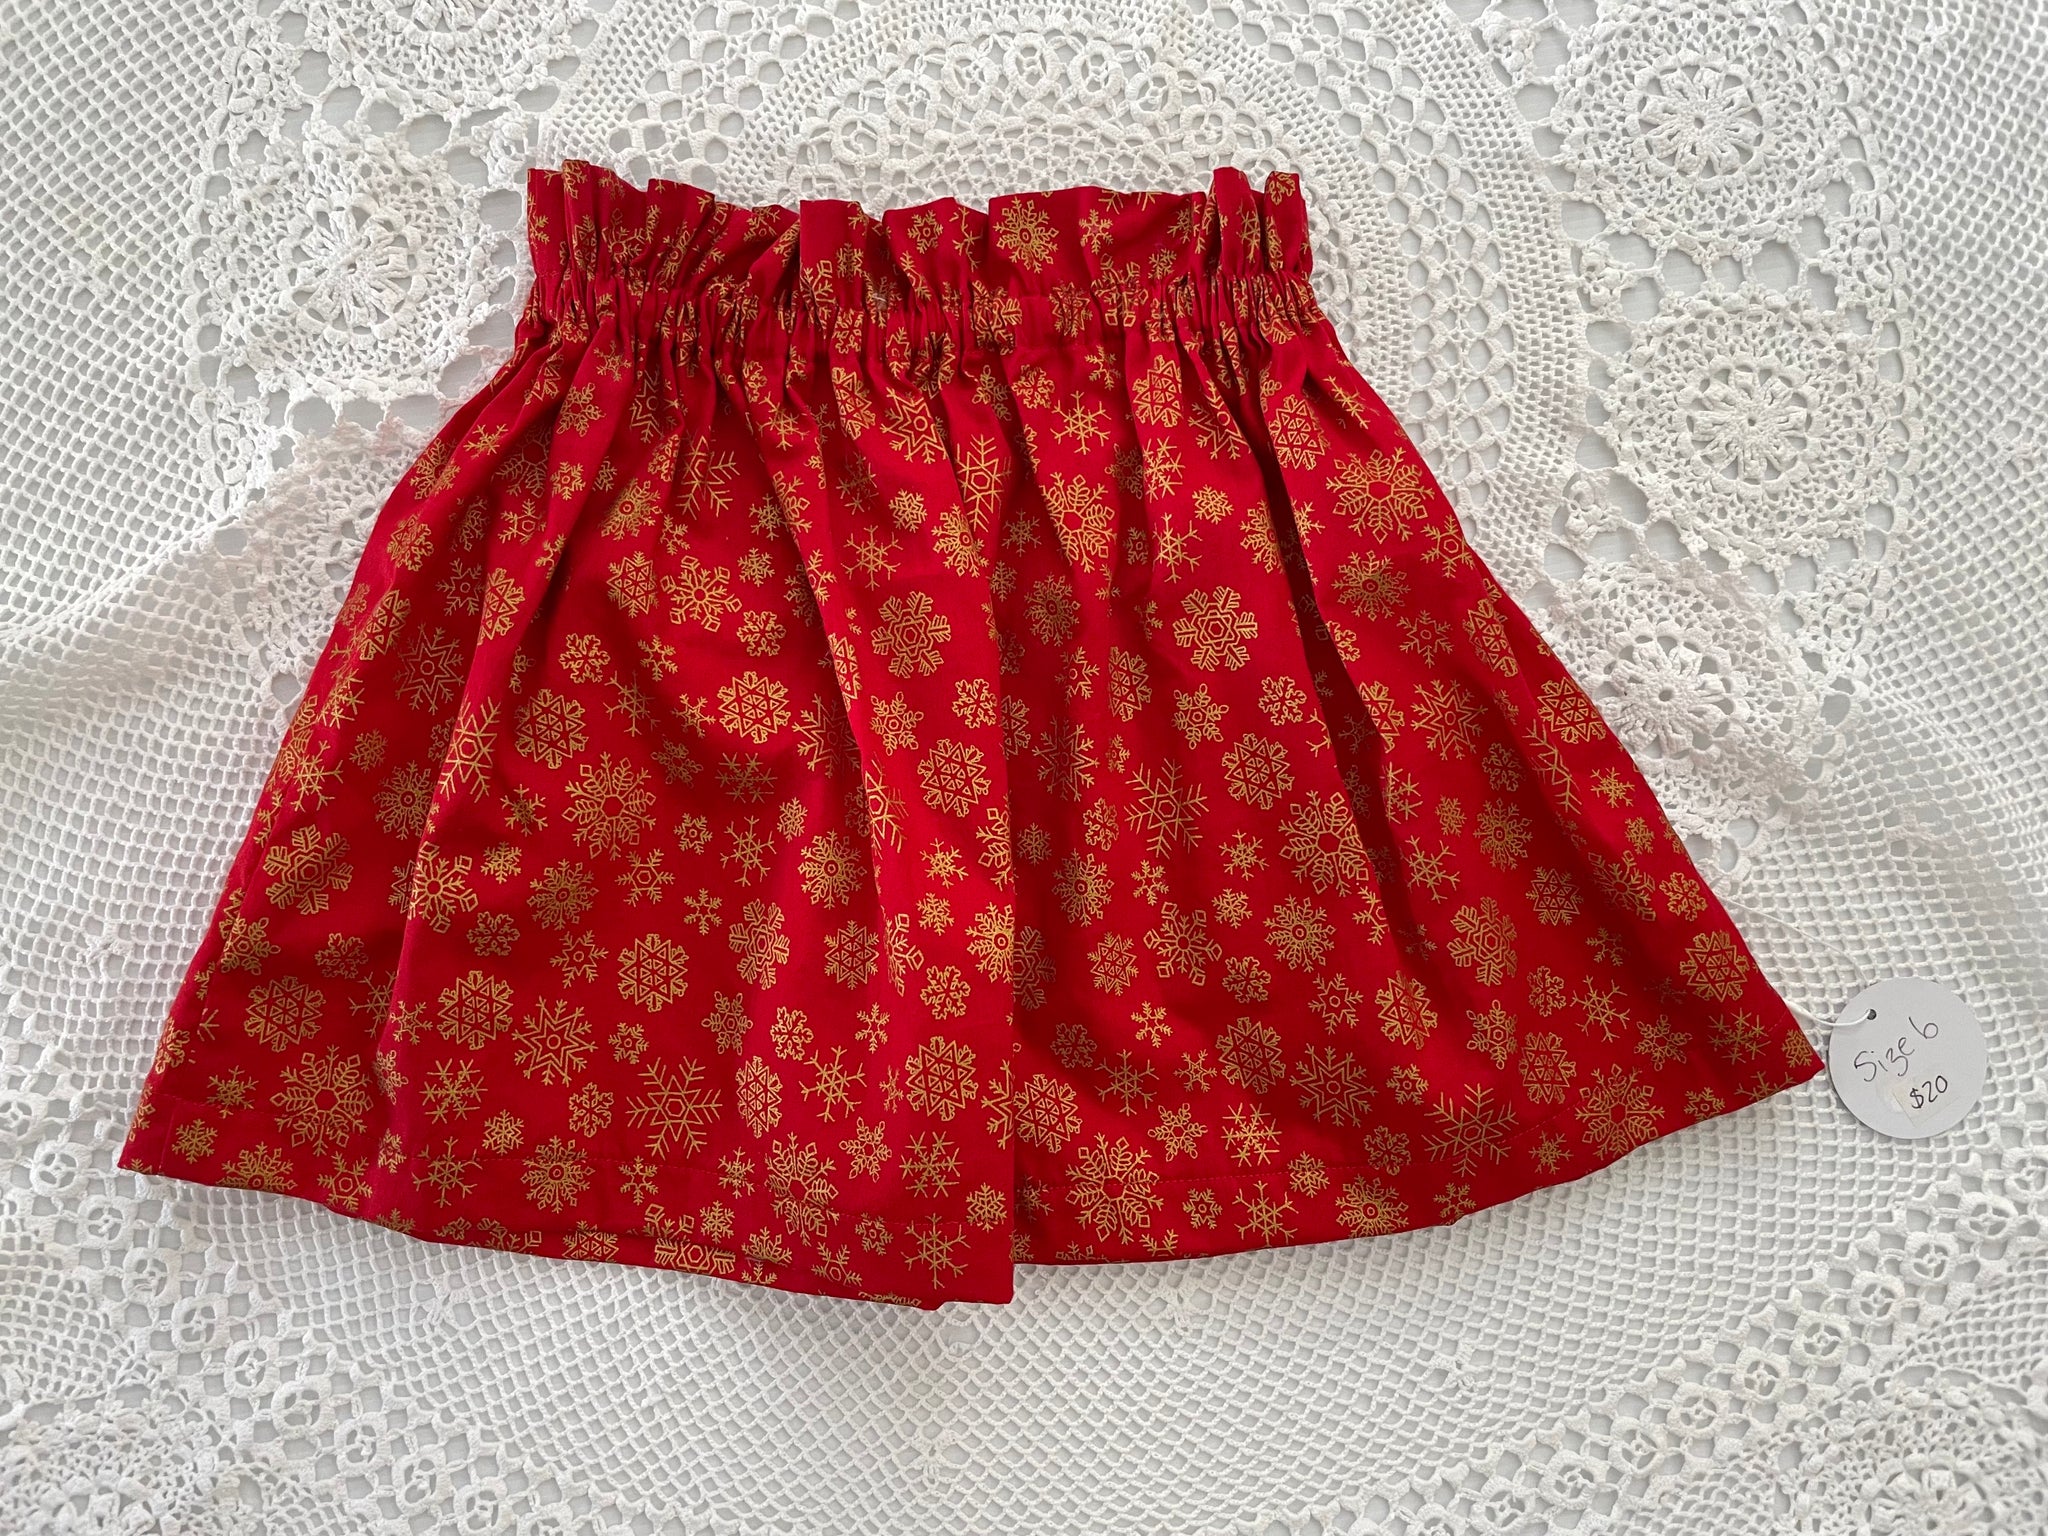 Size 6 skirt